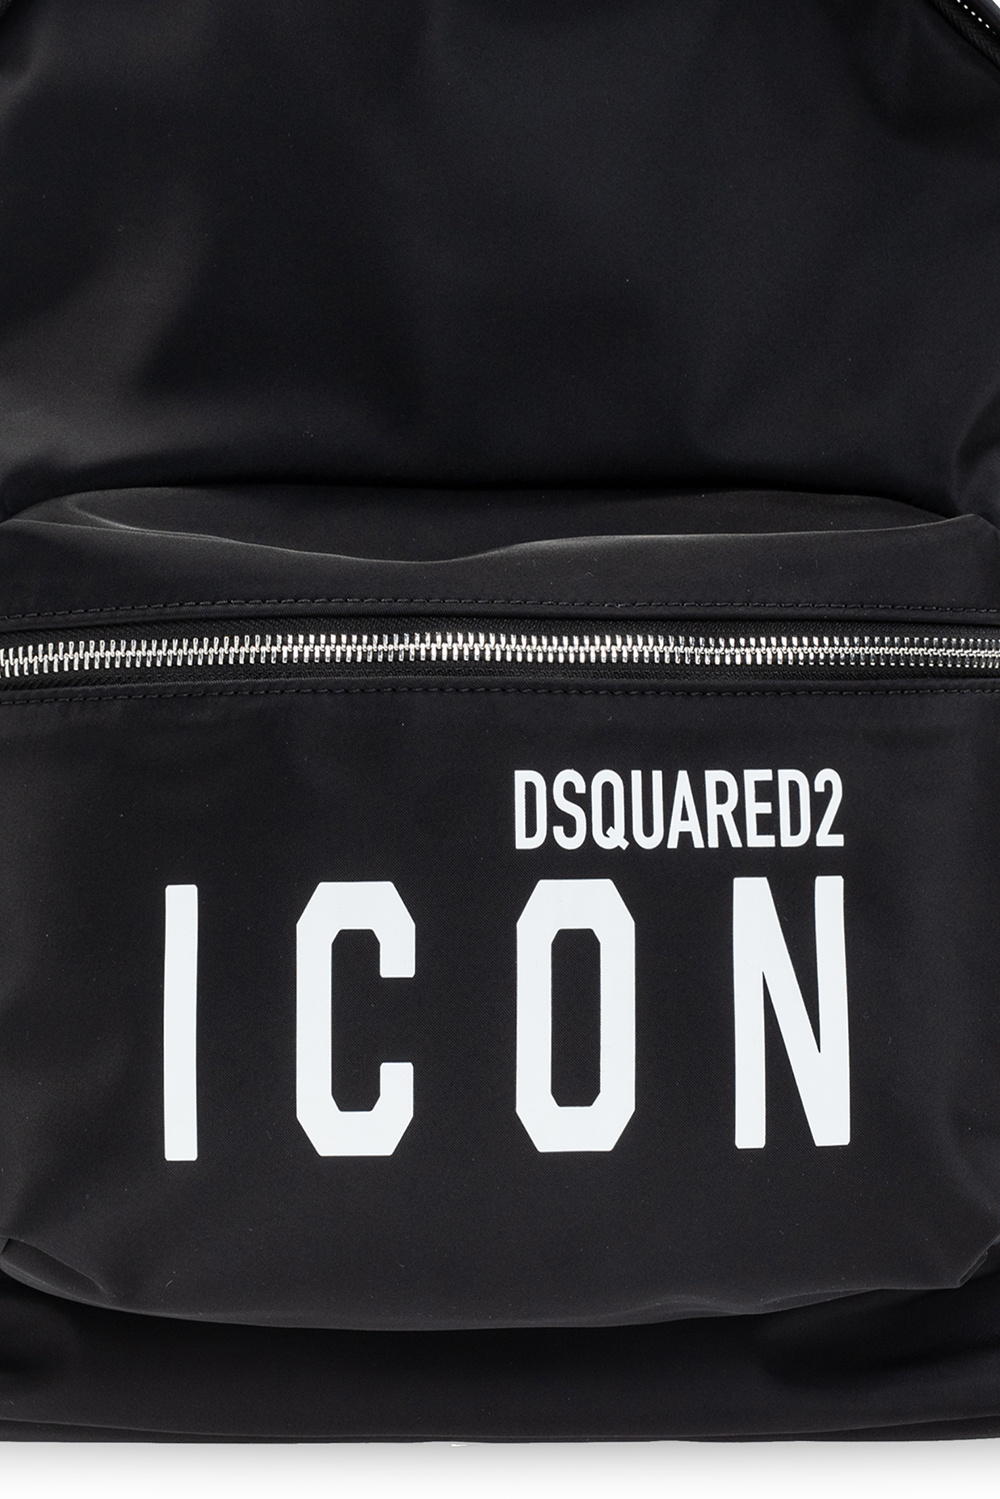 Dsquared2 kara sale handbags Shoulder backpacks accessories